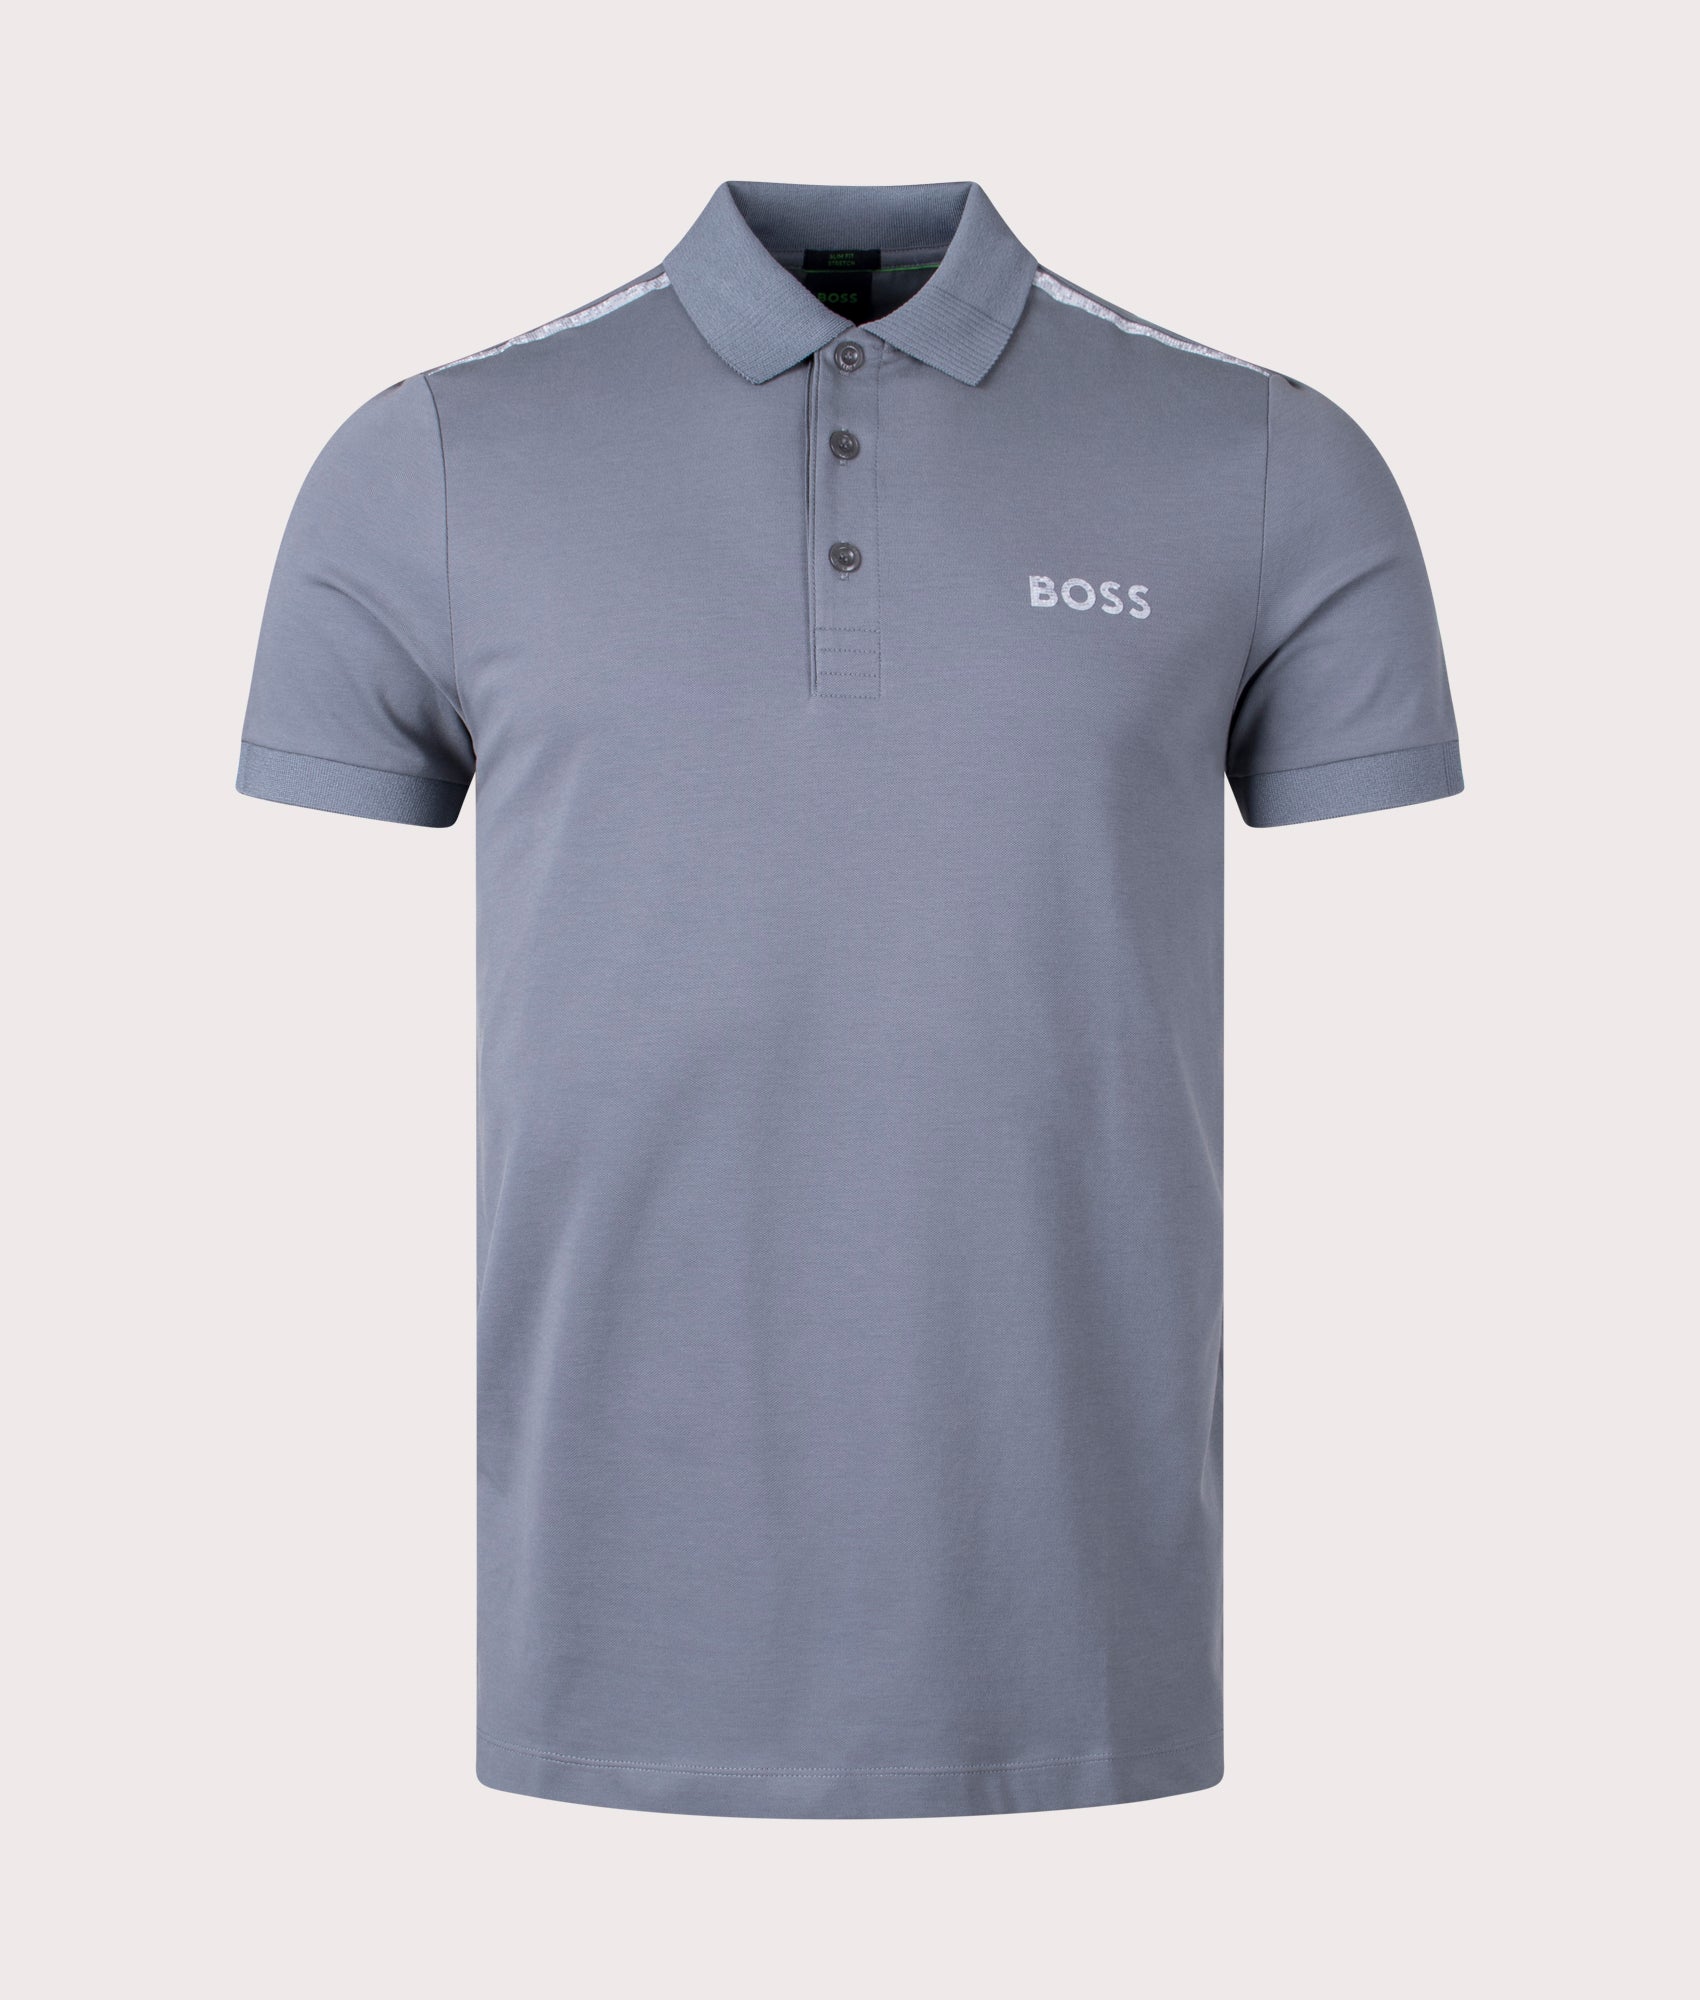 BOSS Mens Slim Fit Paule Mirror Polo Shirt - Colour: 036 Medium Grey - Size: XXL